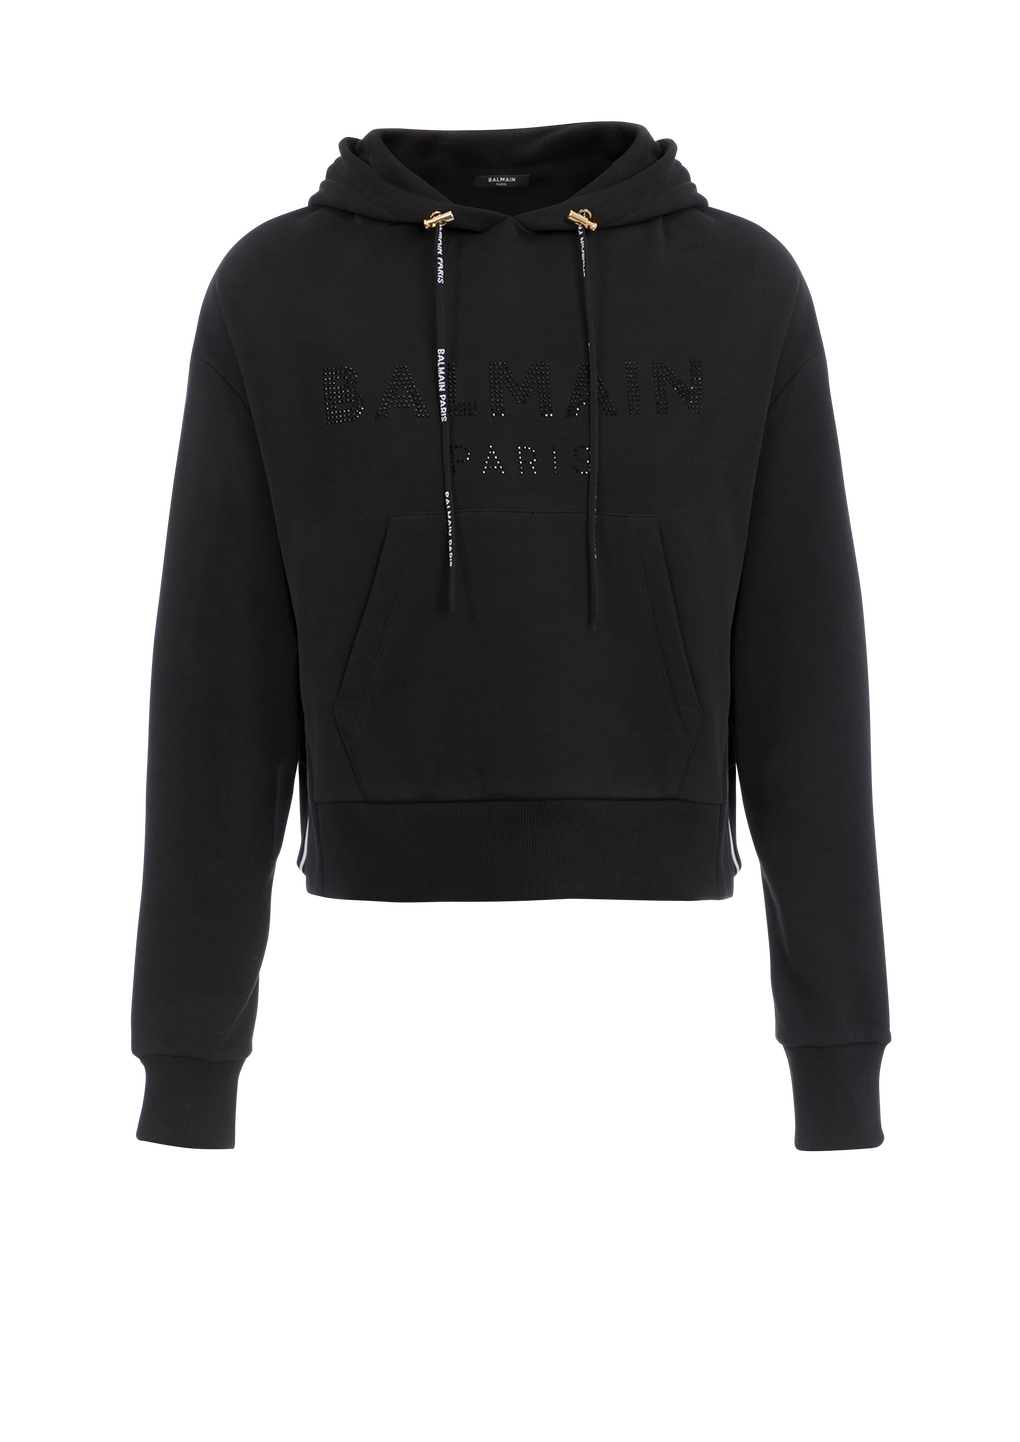 Cropped eco-designed cotton sweatshirt with rhinestone Balmain logo, black, hi-res